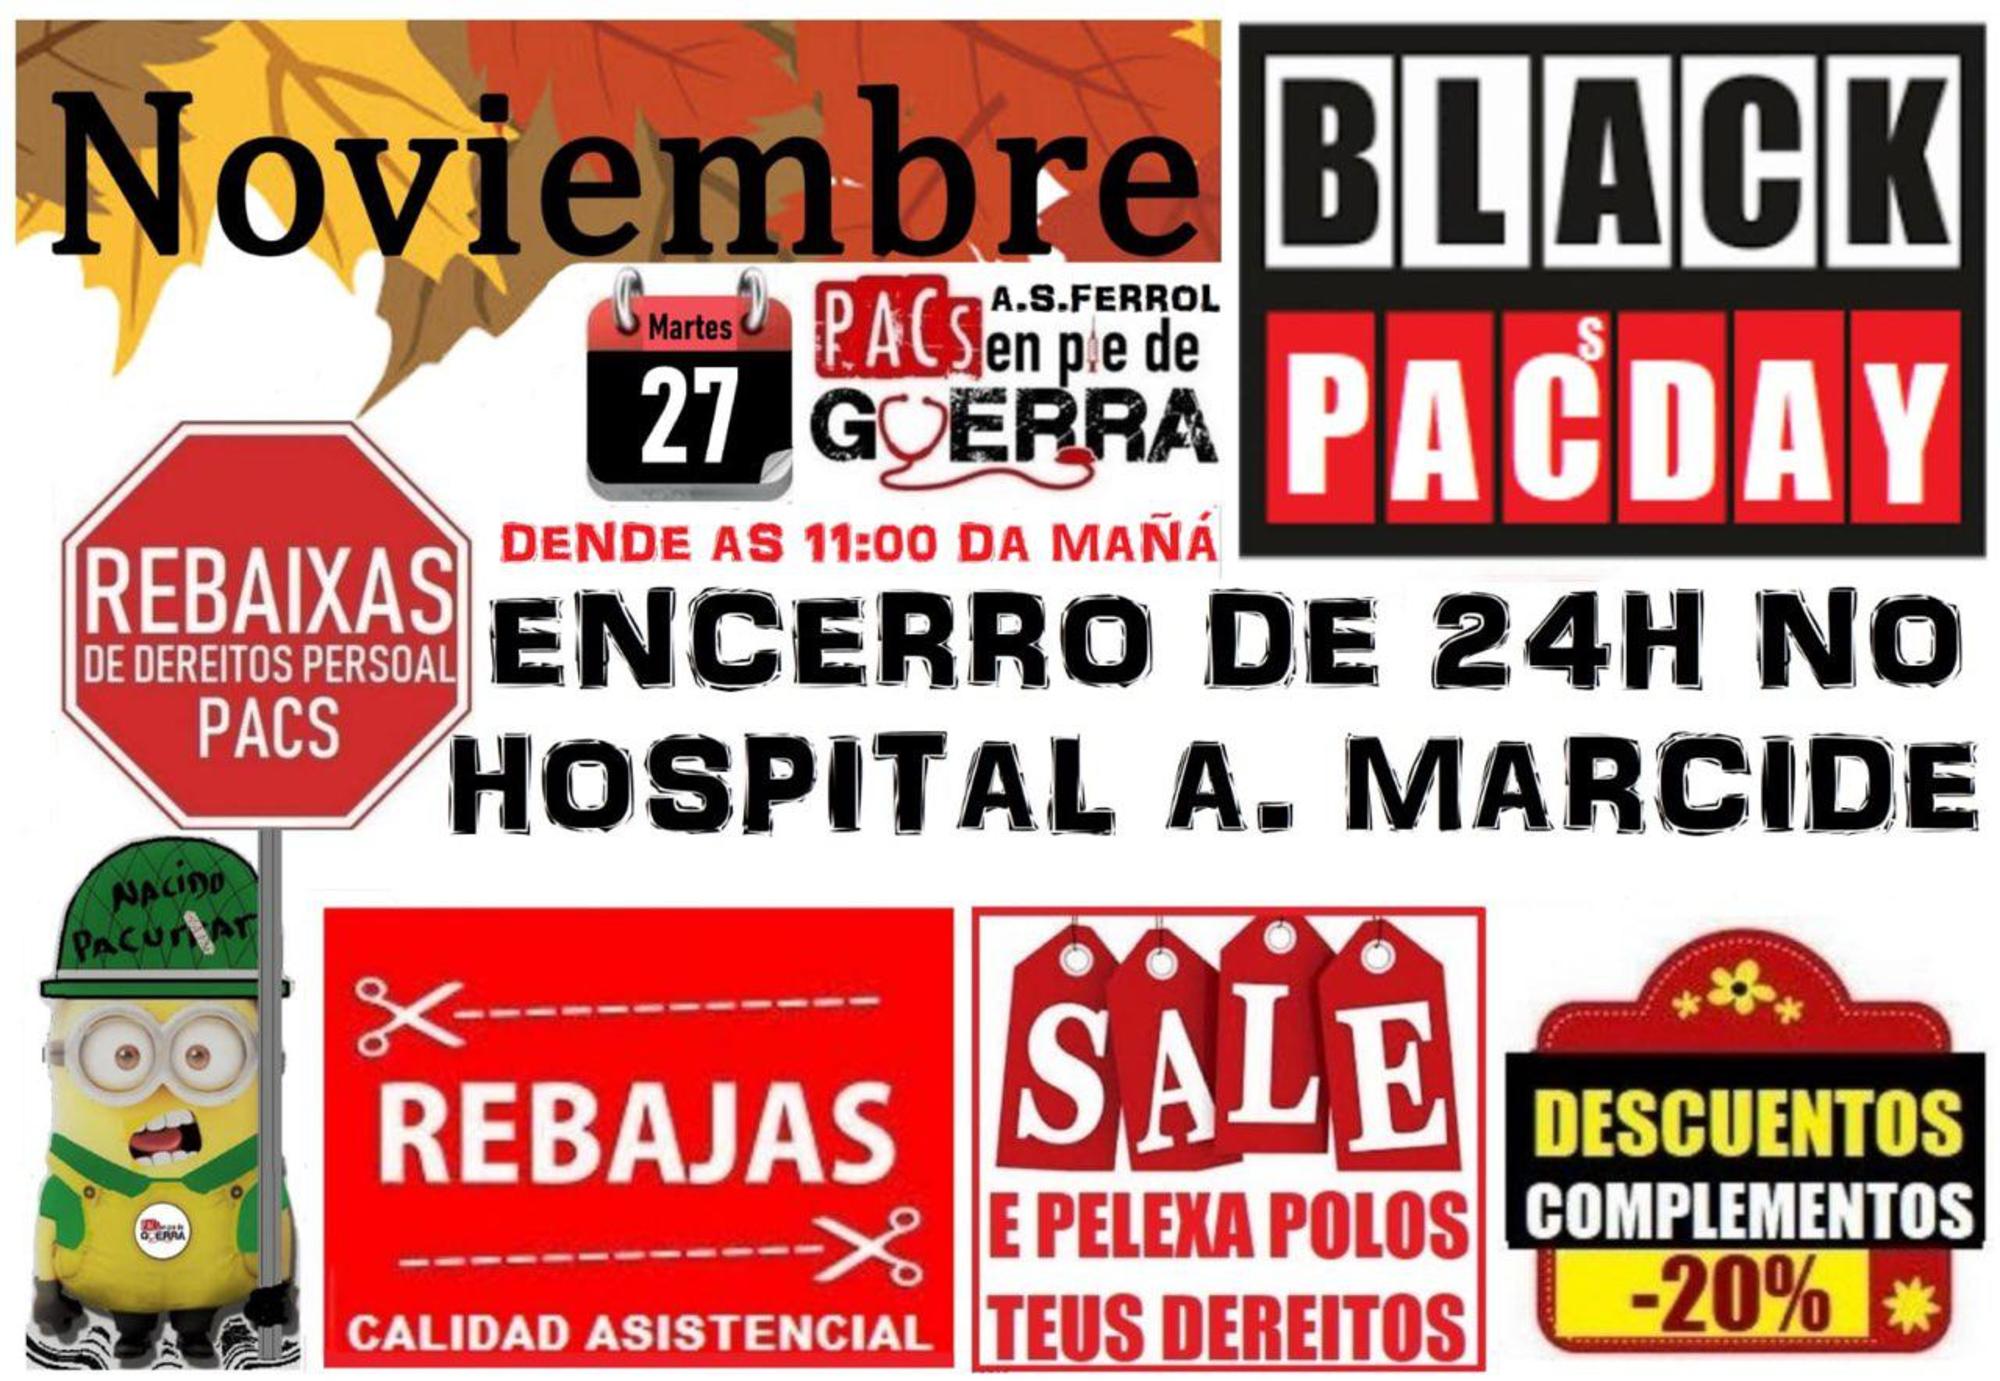 Black Pacday Ferrol